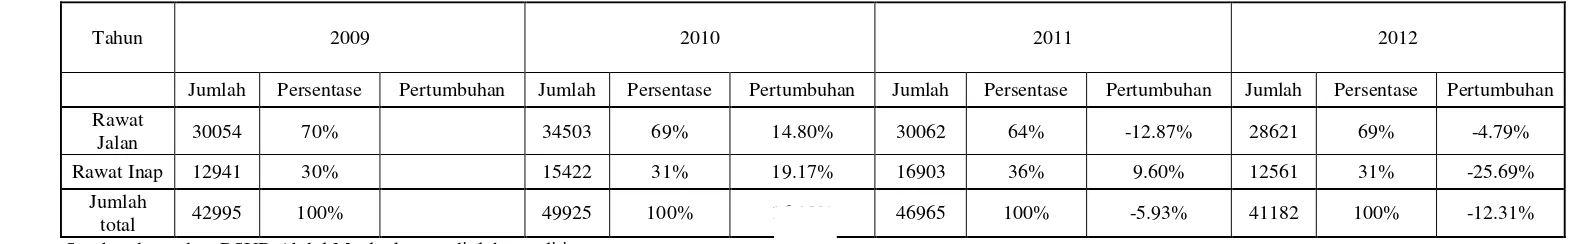 Tabel 1 : Data pasien Jamkesmas RSUD Abdul Moeloek Tahun 2009-2012 